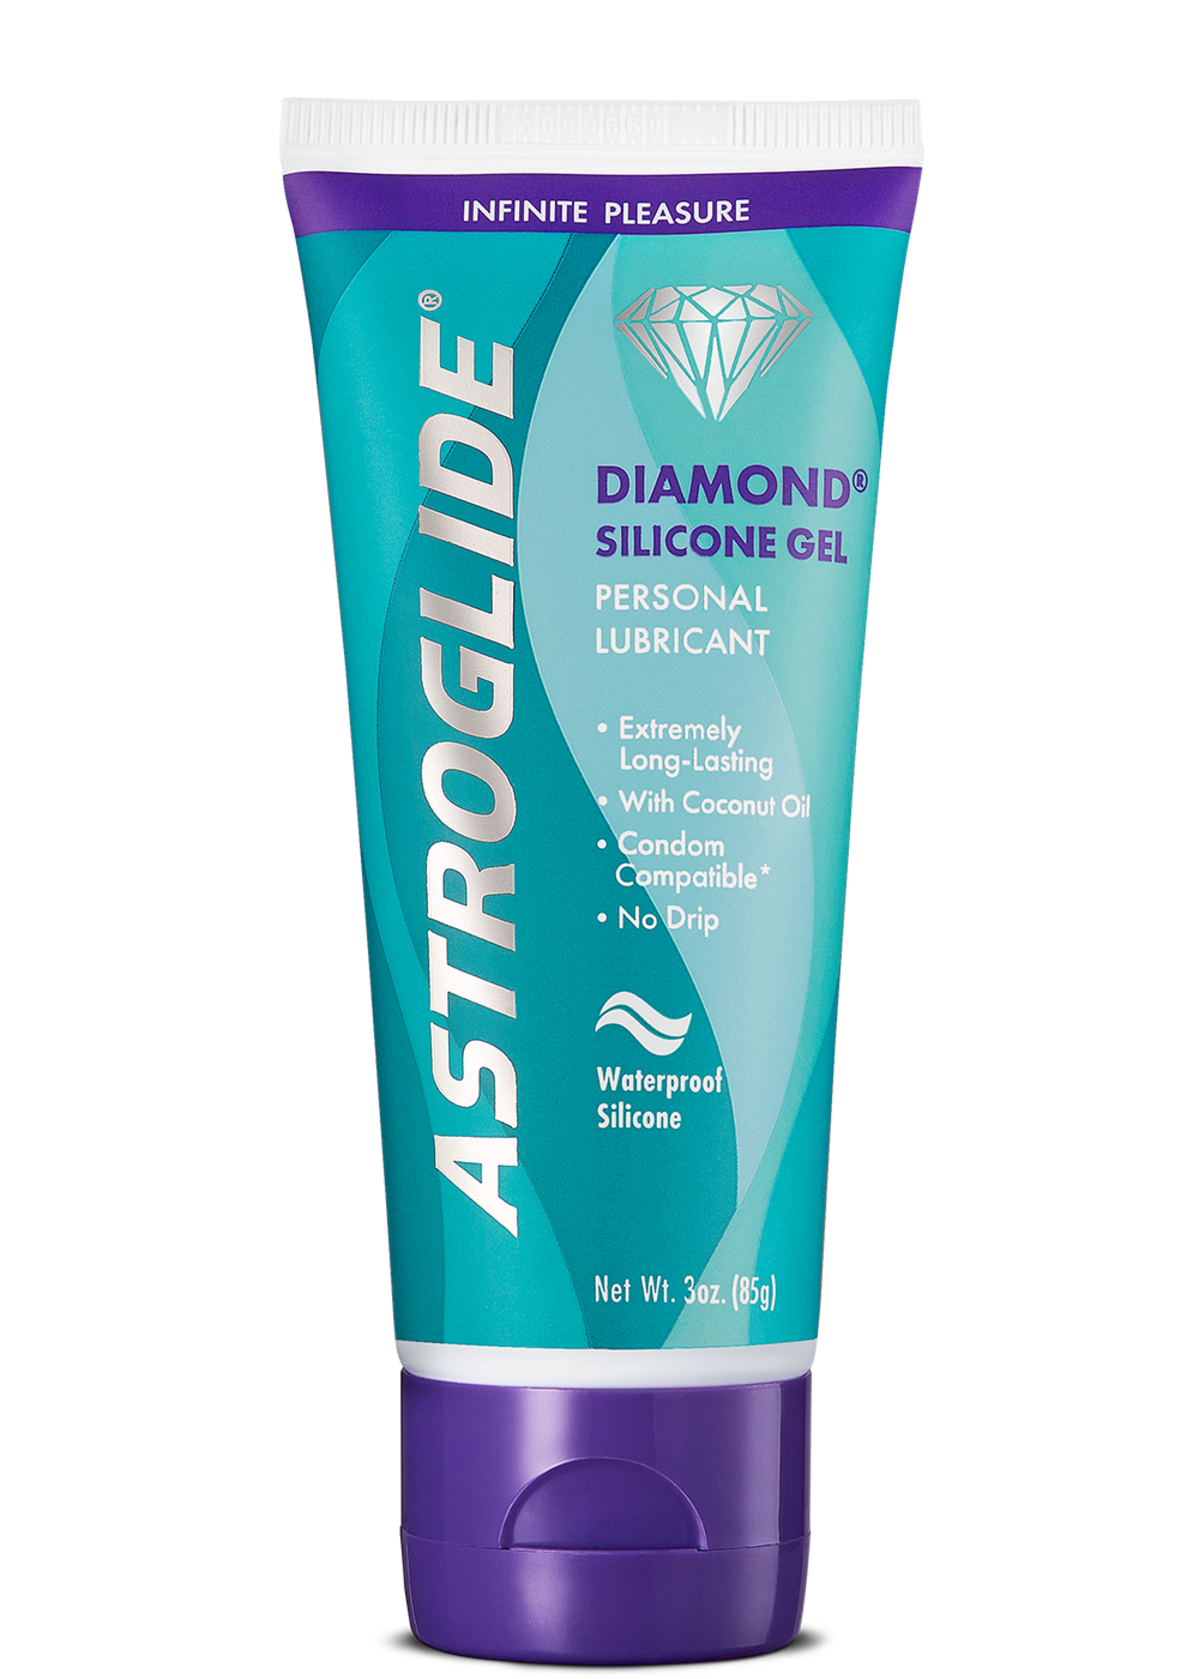 Silicone Based Lubricant | Astroglide Diamond Silicone Gel ...